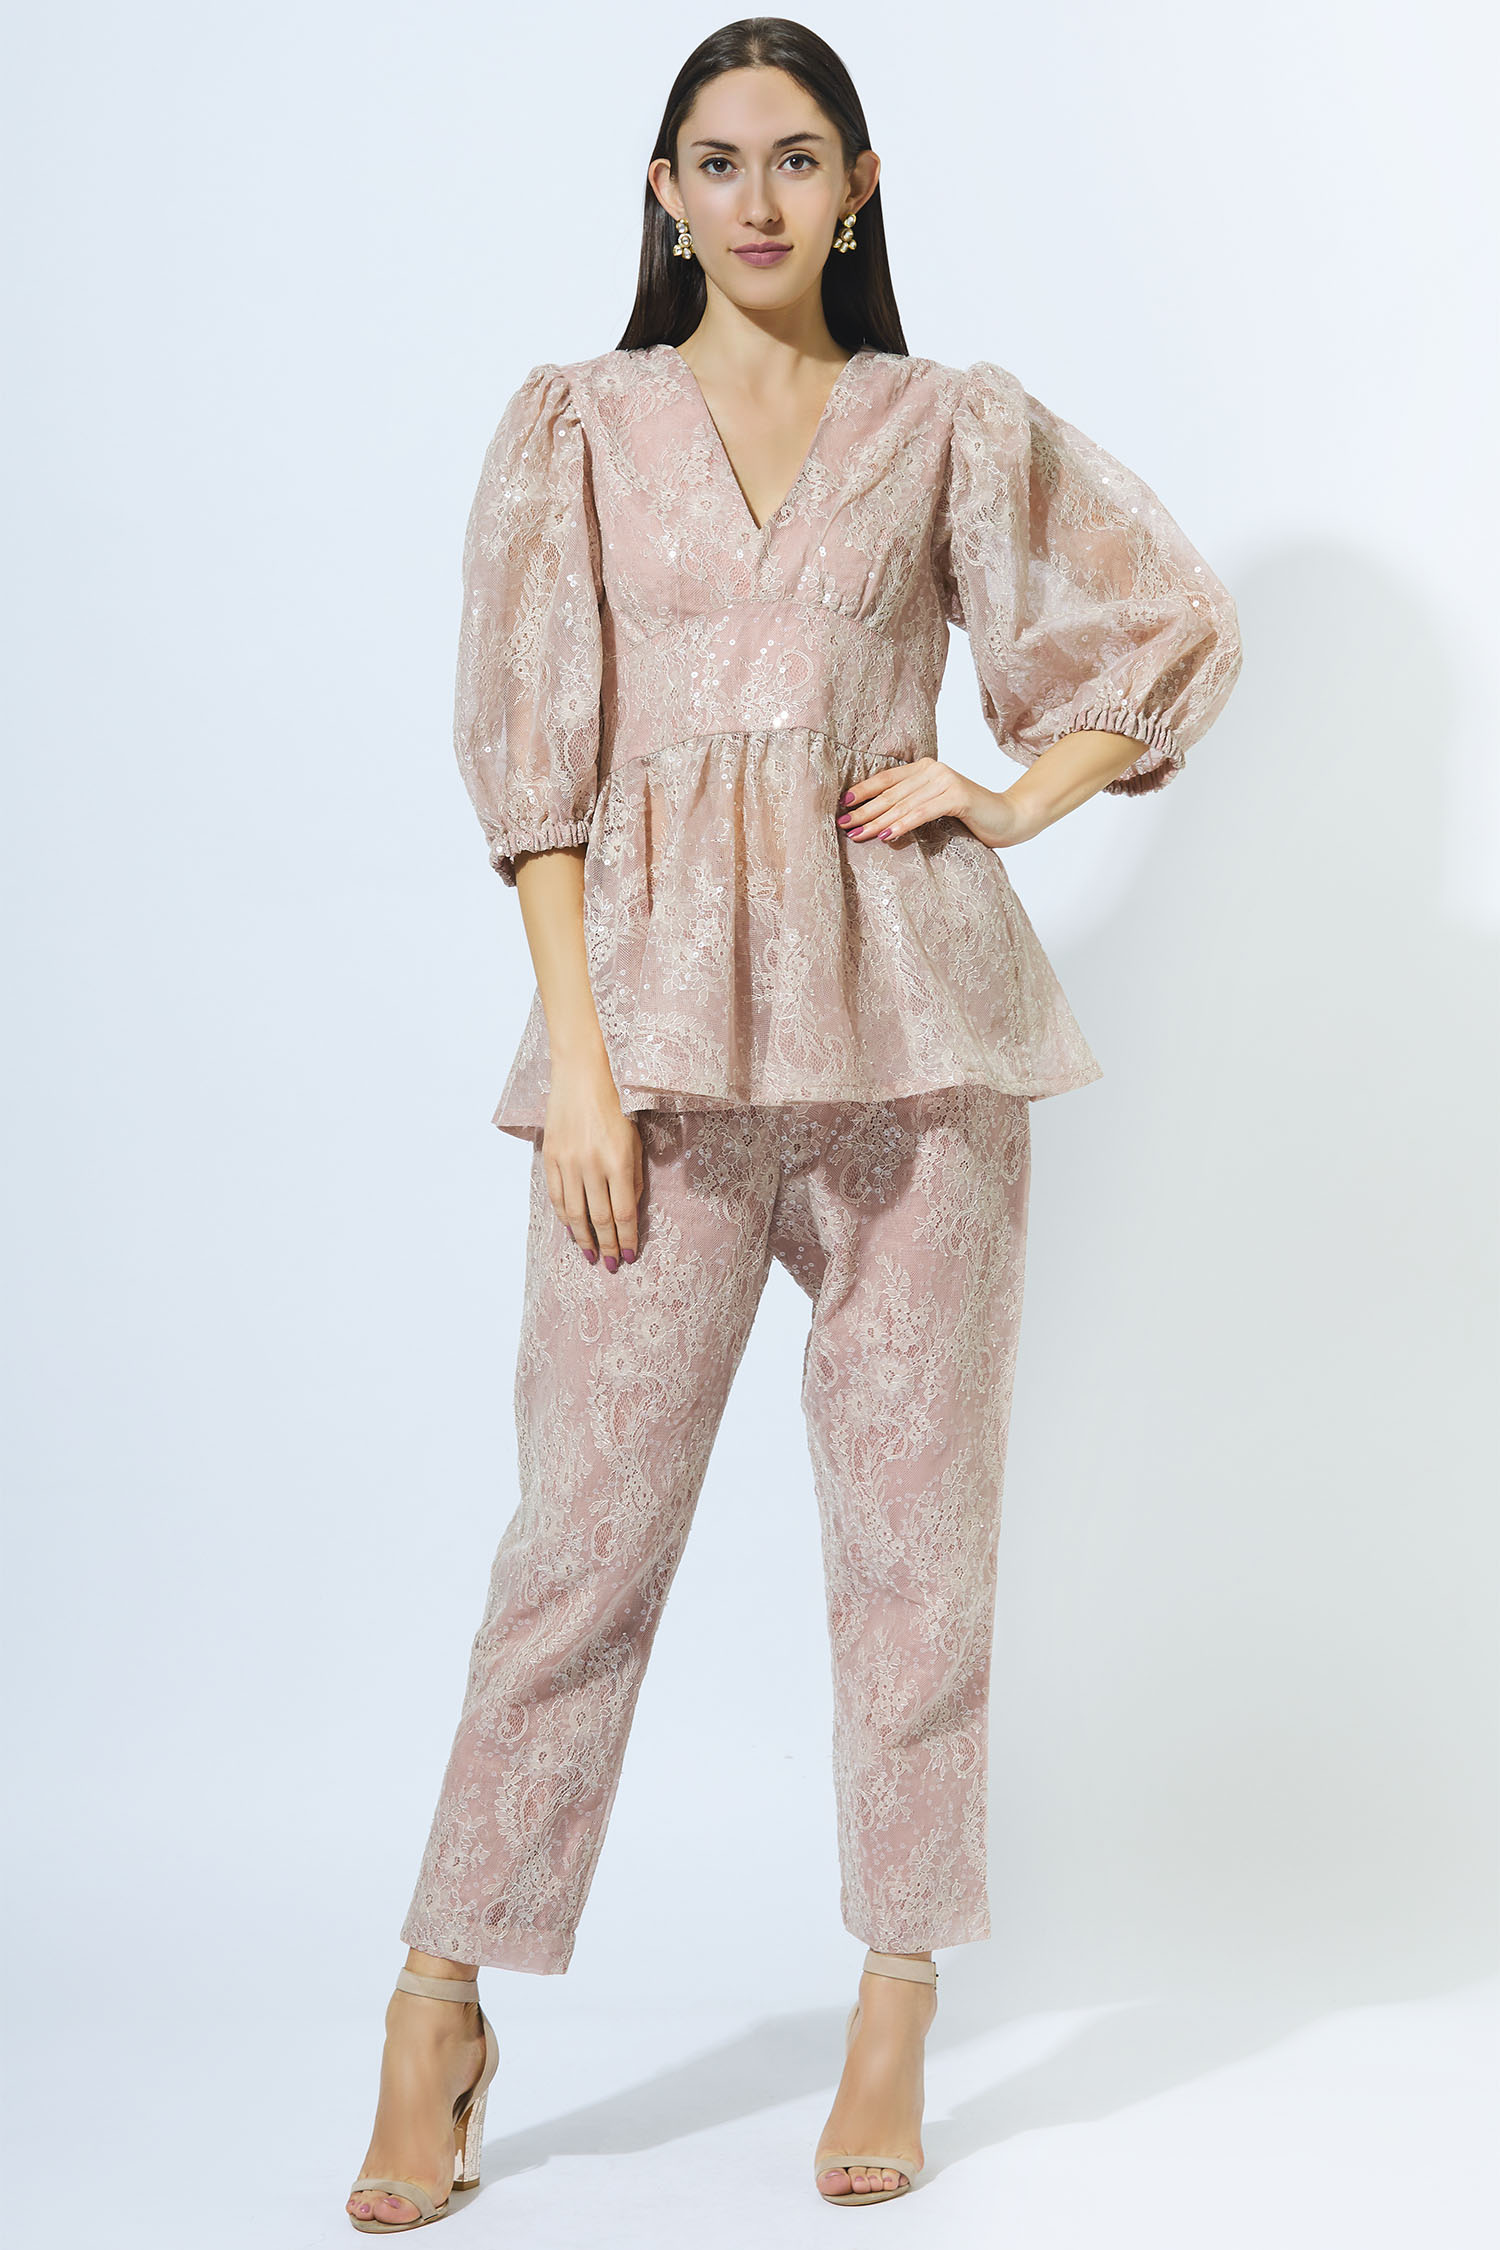 Kisneel by Pam Pink Lace Peplum Top Pant Set